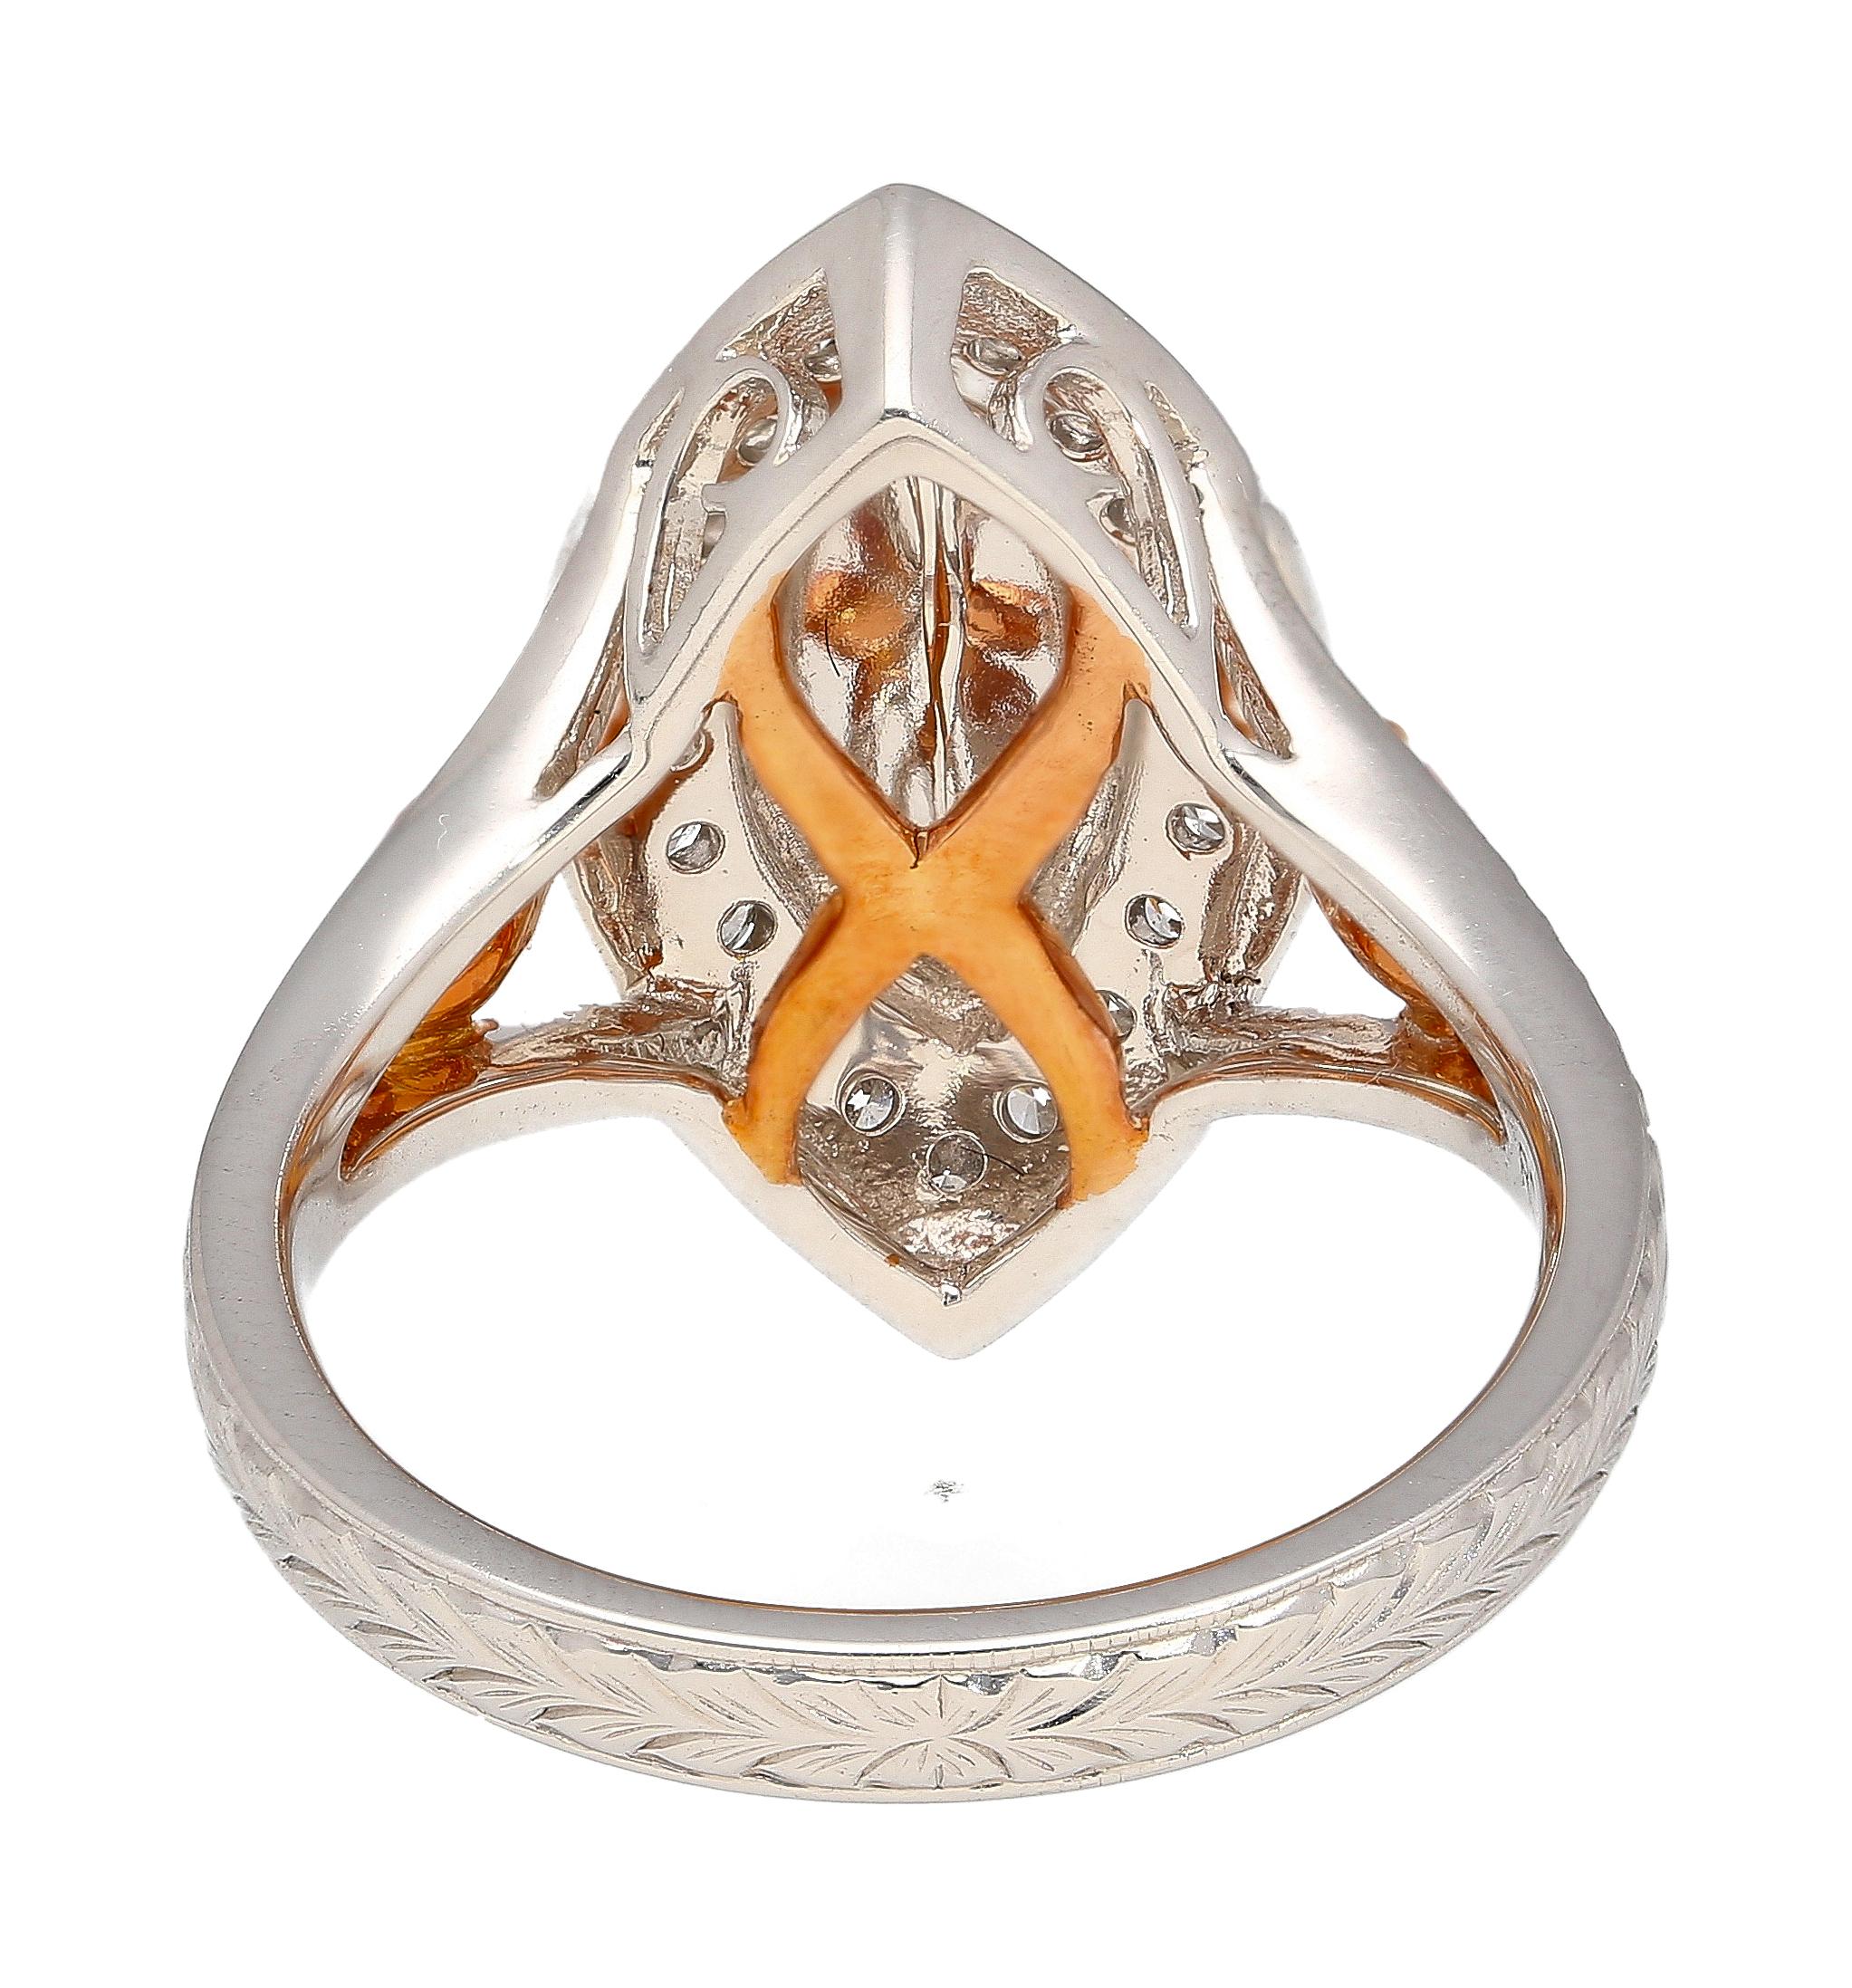 Art Deco Gia Cert. 1.92 Carat Marquise Fancy Deep Brownish Greenish Yellow Diamond Ring For Sale